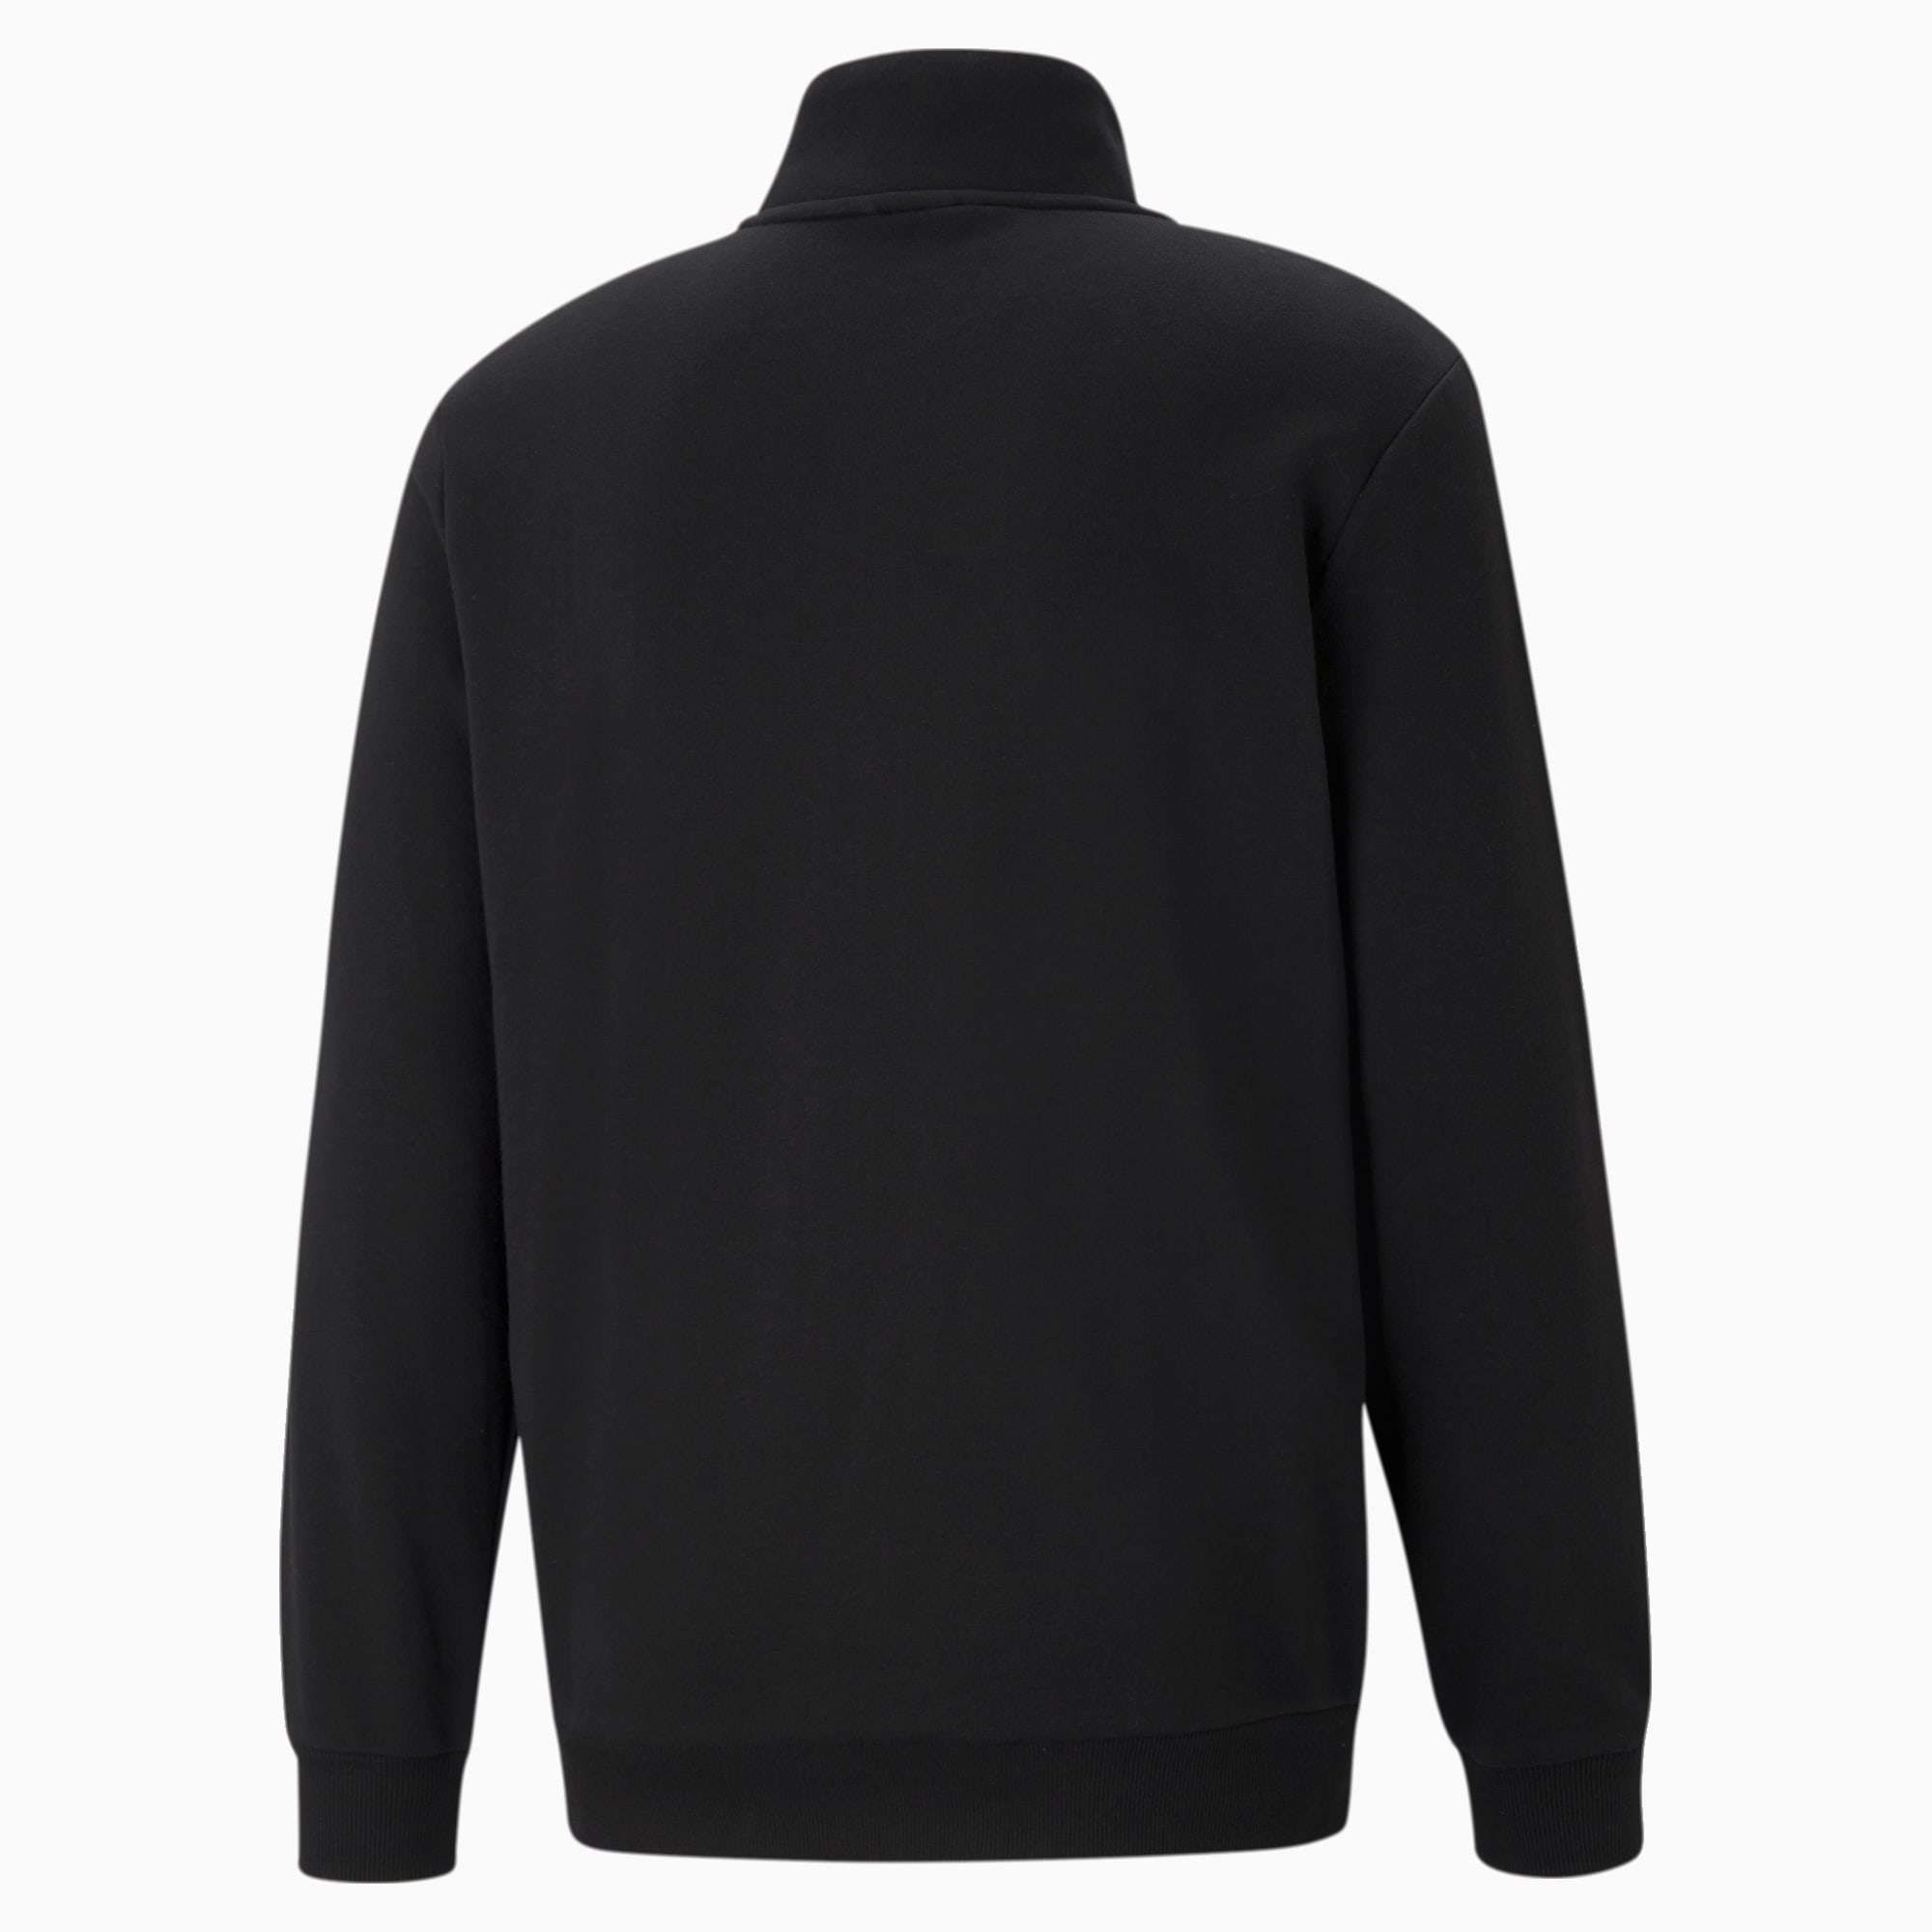 PUMA Essentials Men's Track Jacket, Black, Size M, Clothing